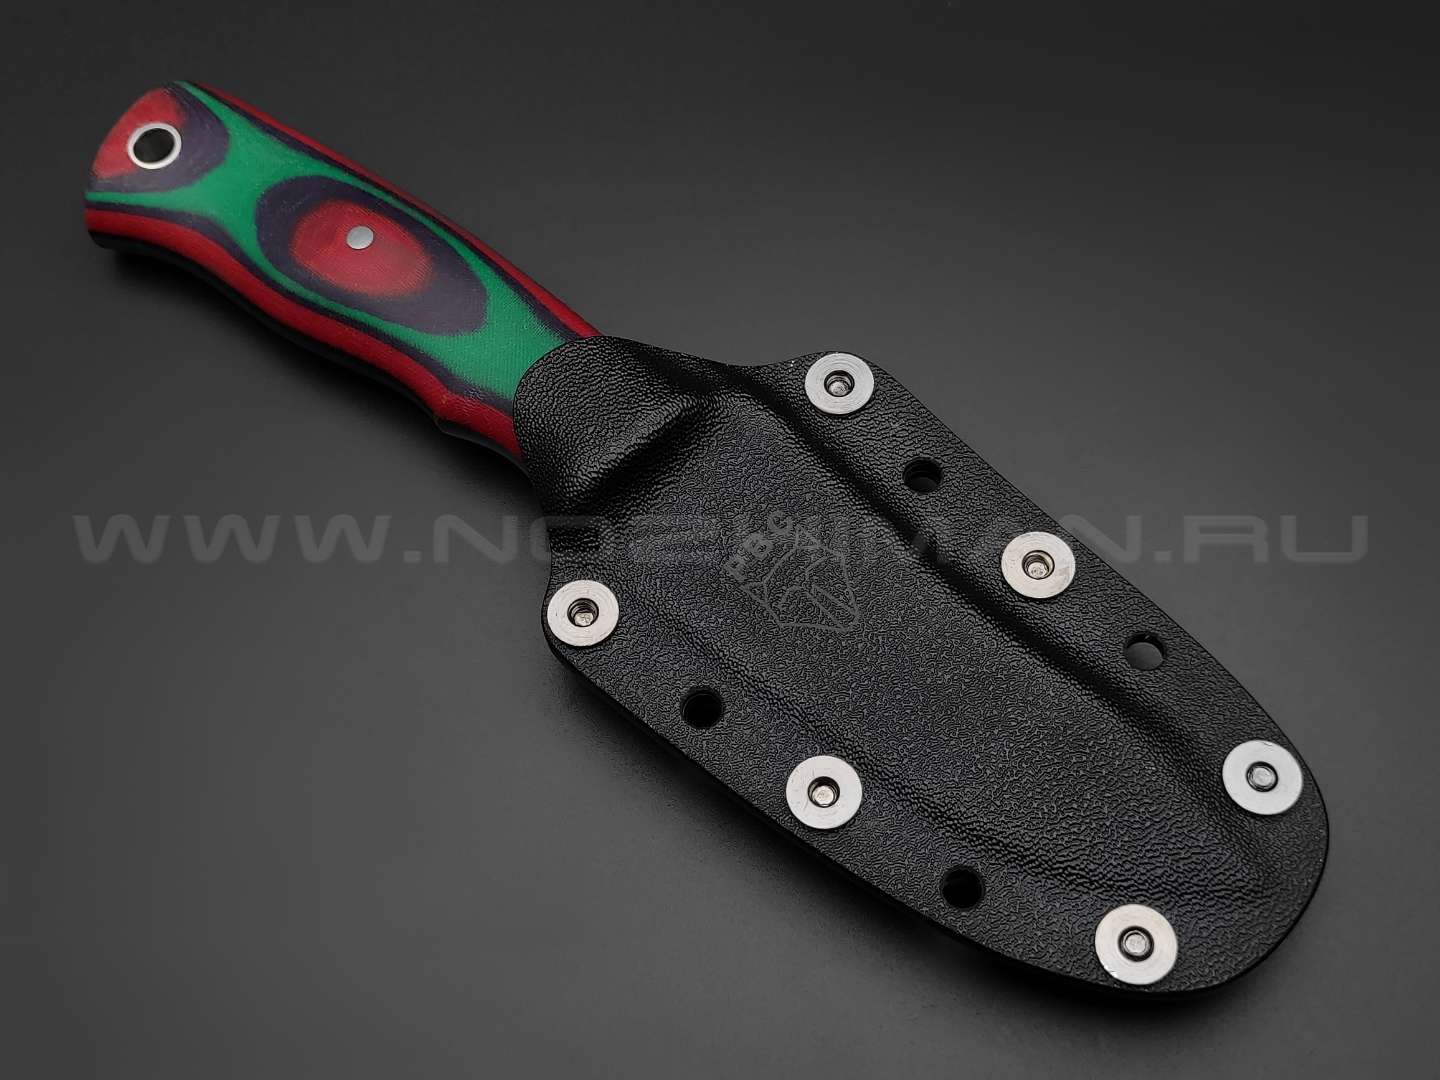 РВС нож Зверобой сталь N690, рукоять микарта (green, purple, red)